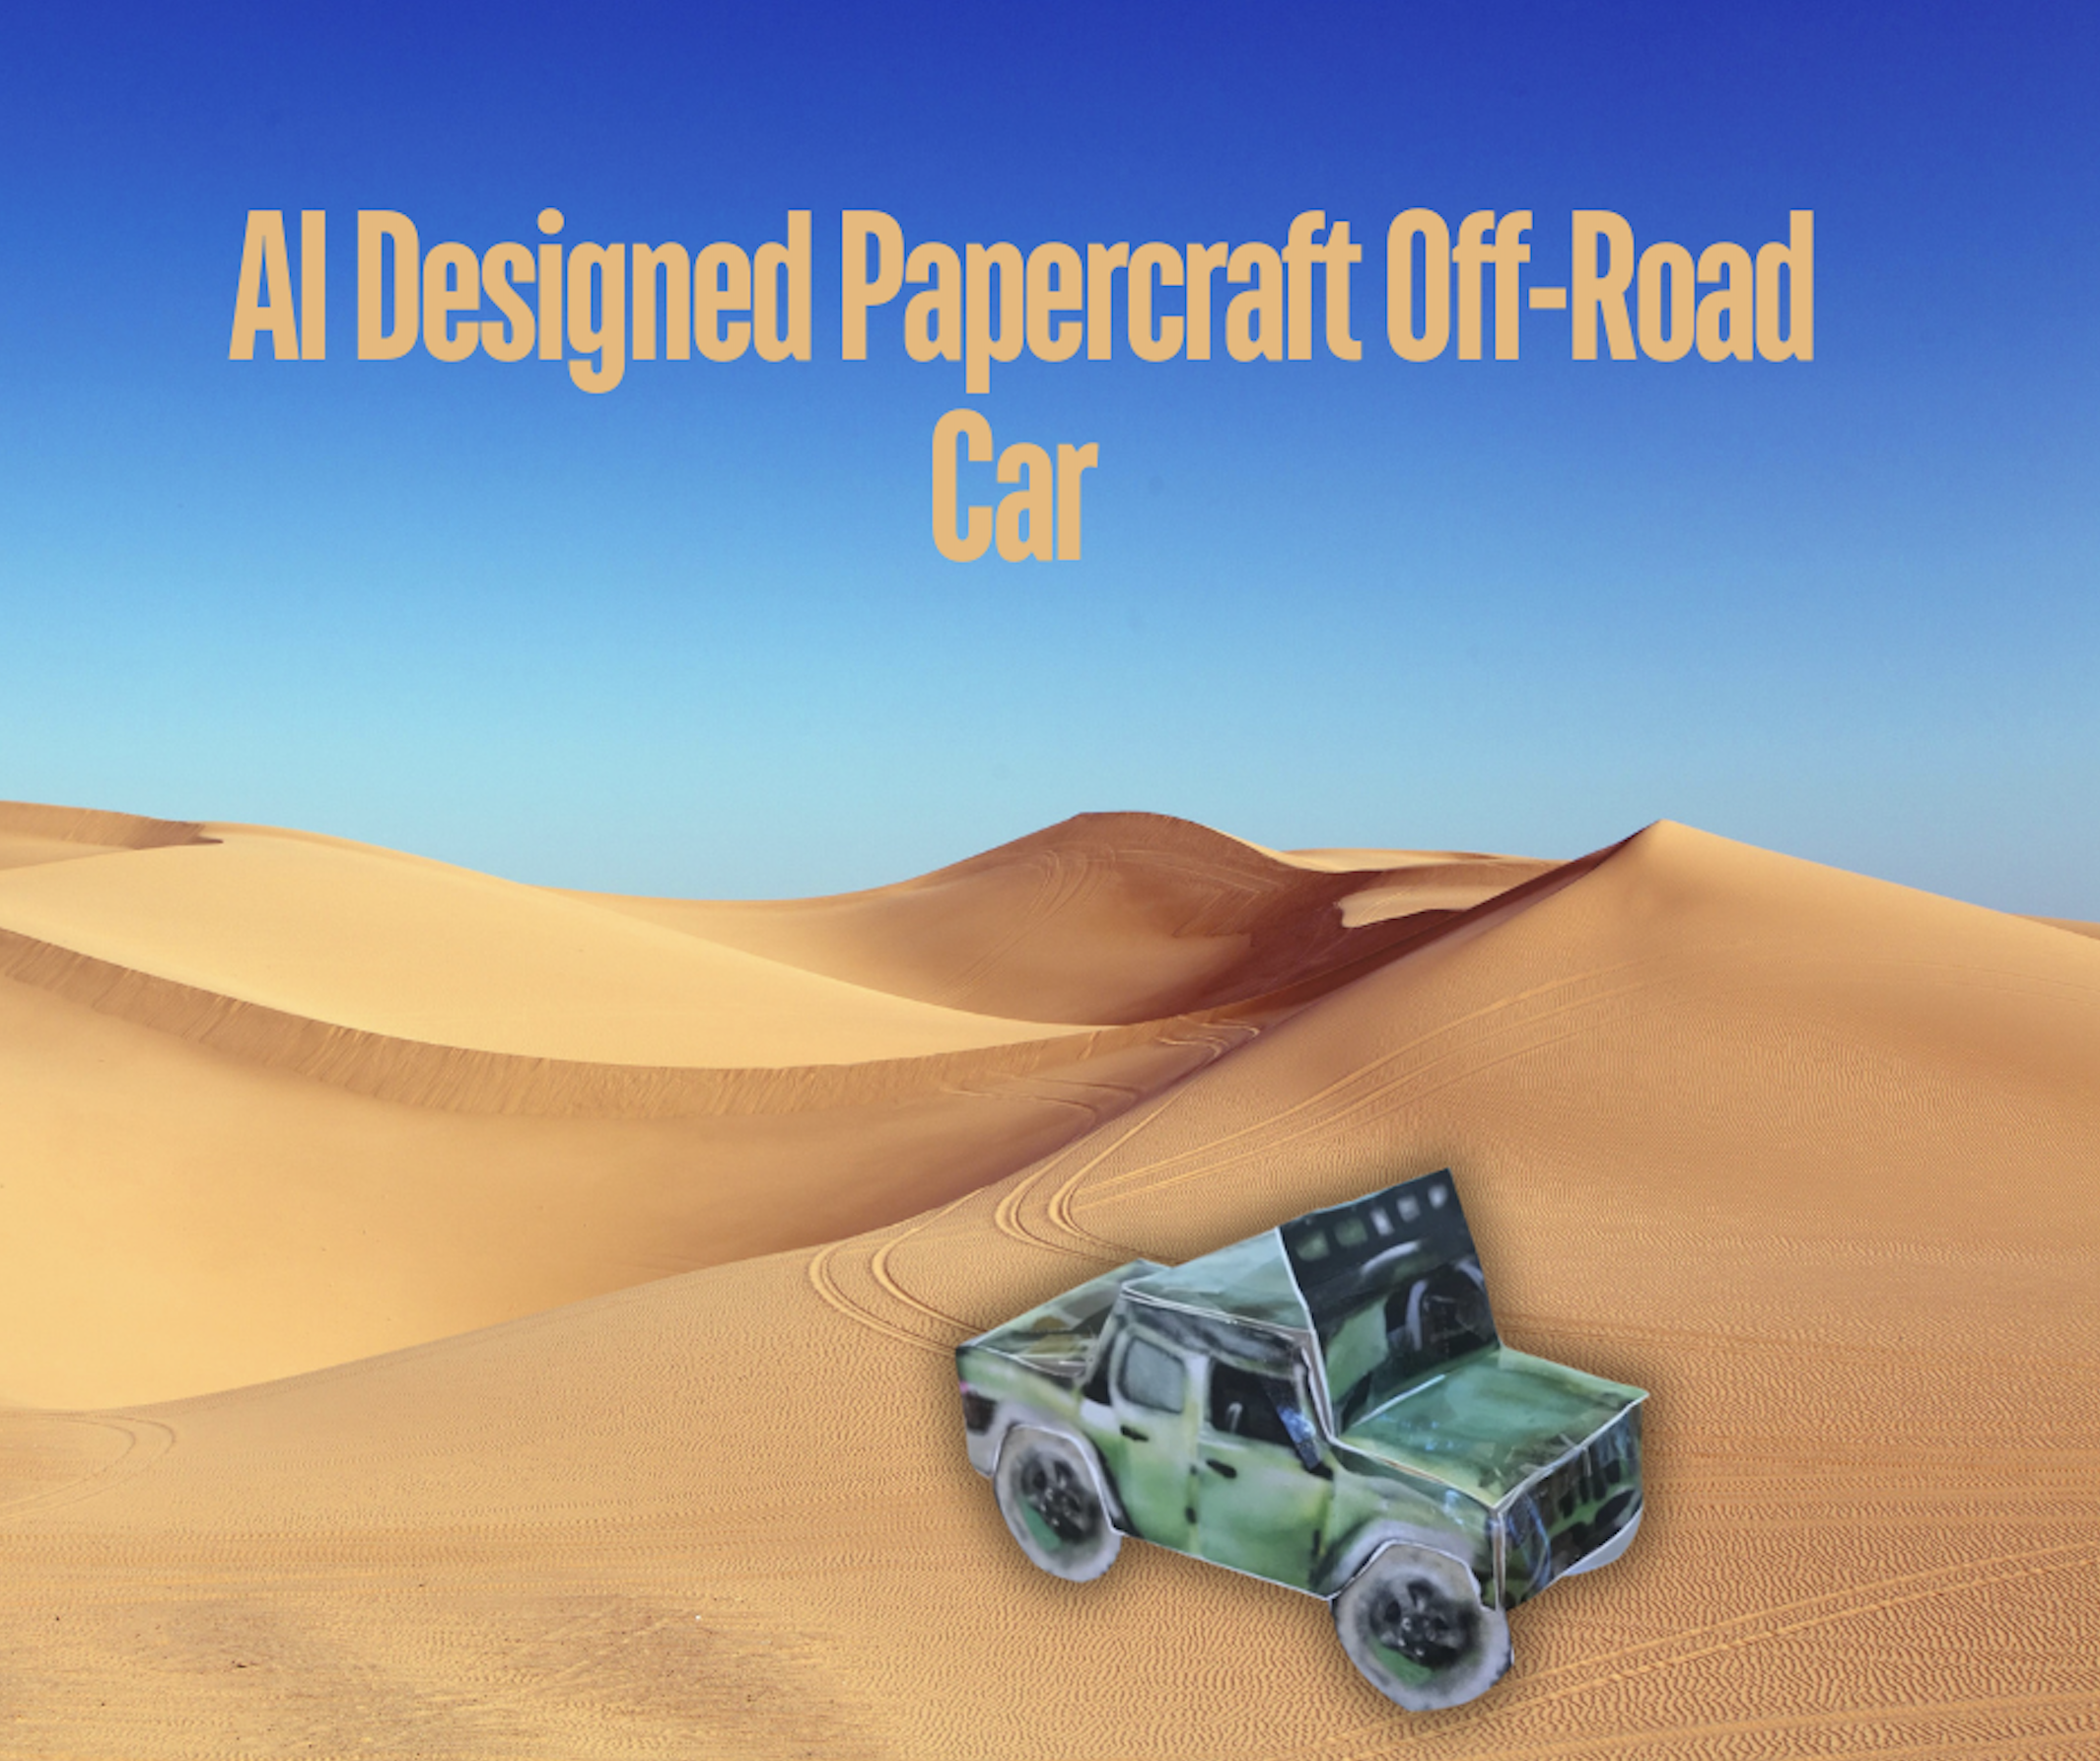 AI Designed Papercraft Off-Road Car